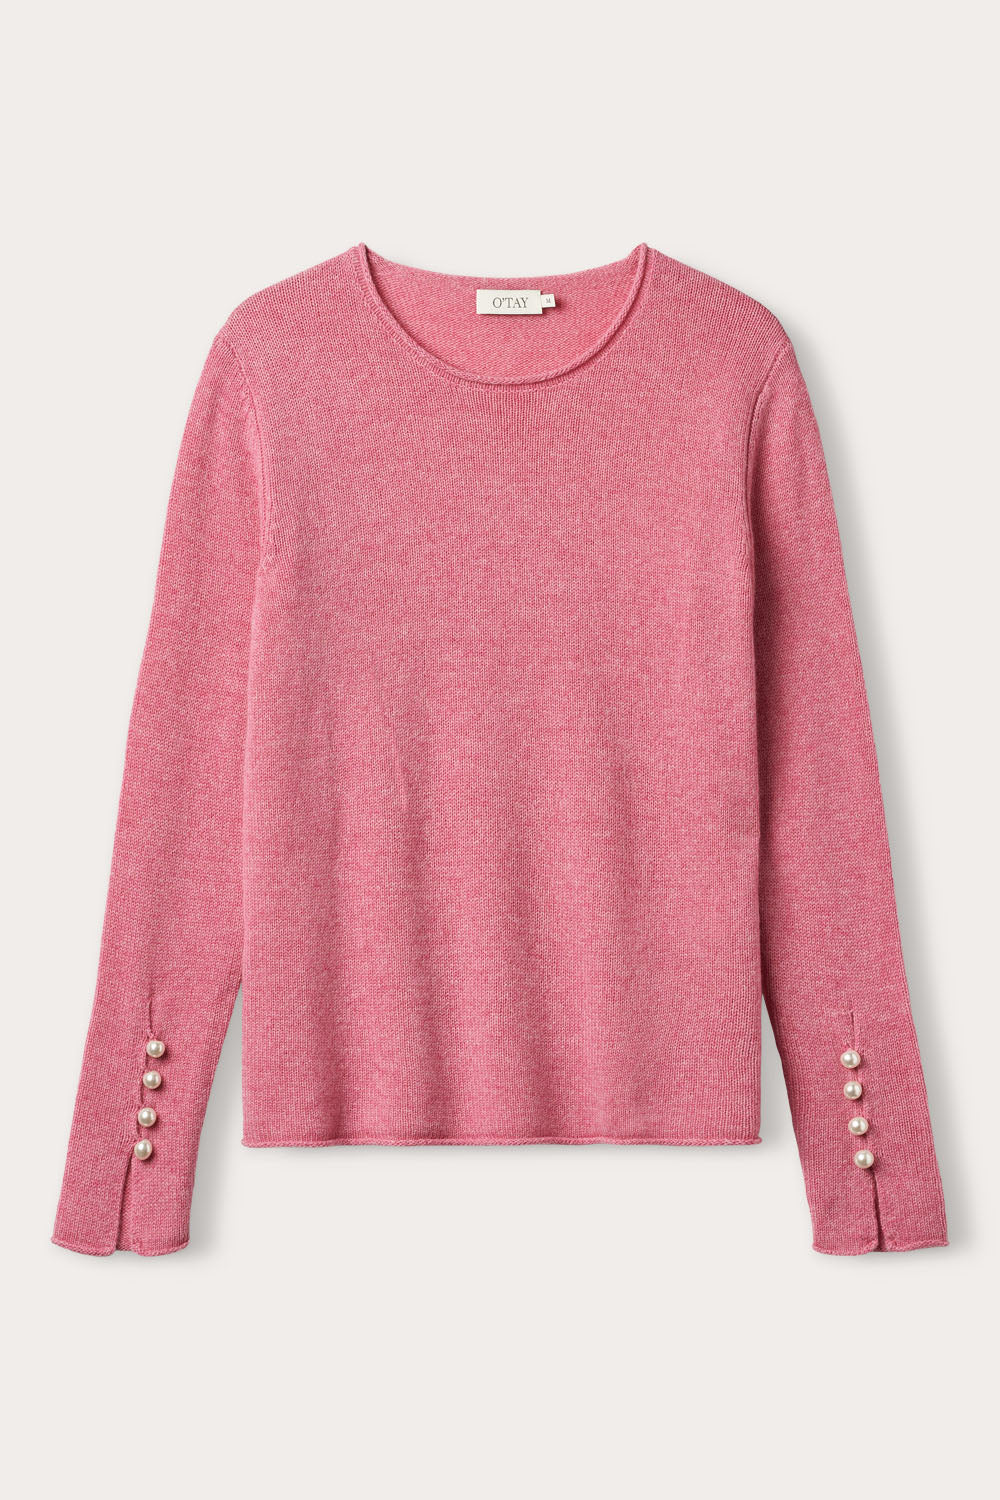 O'TAY Abbelone Sweater Blouses Pink Melange